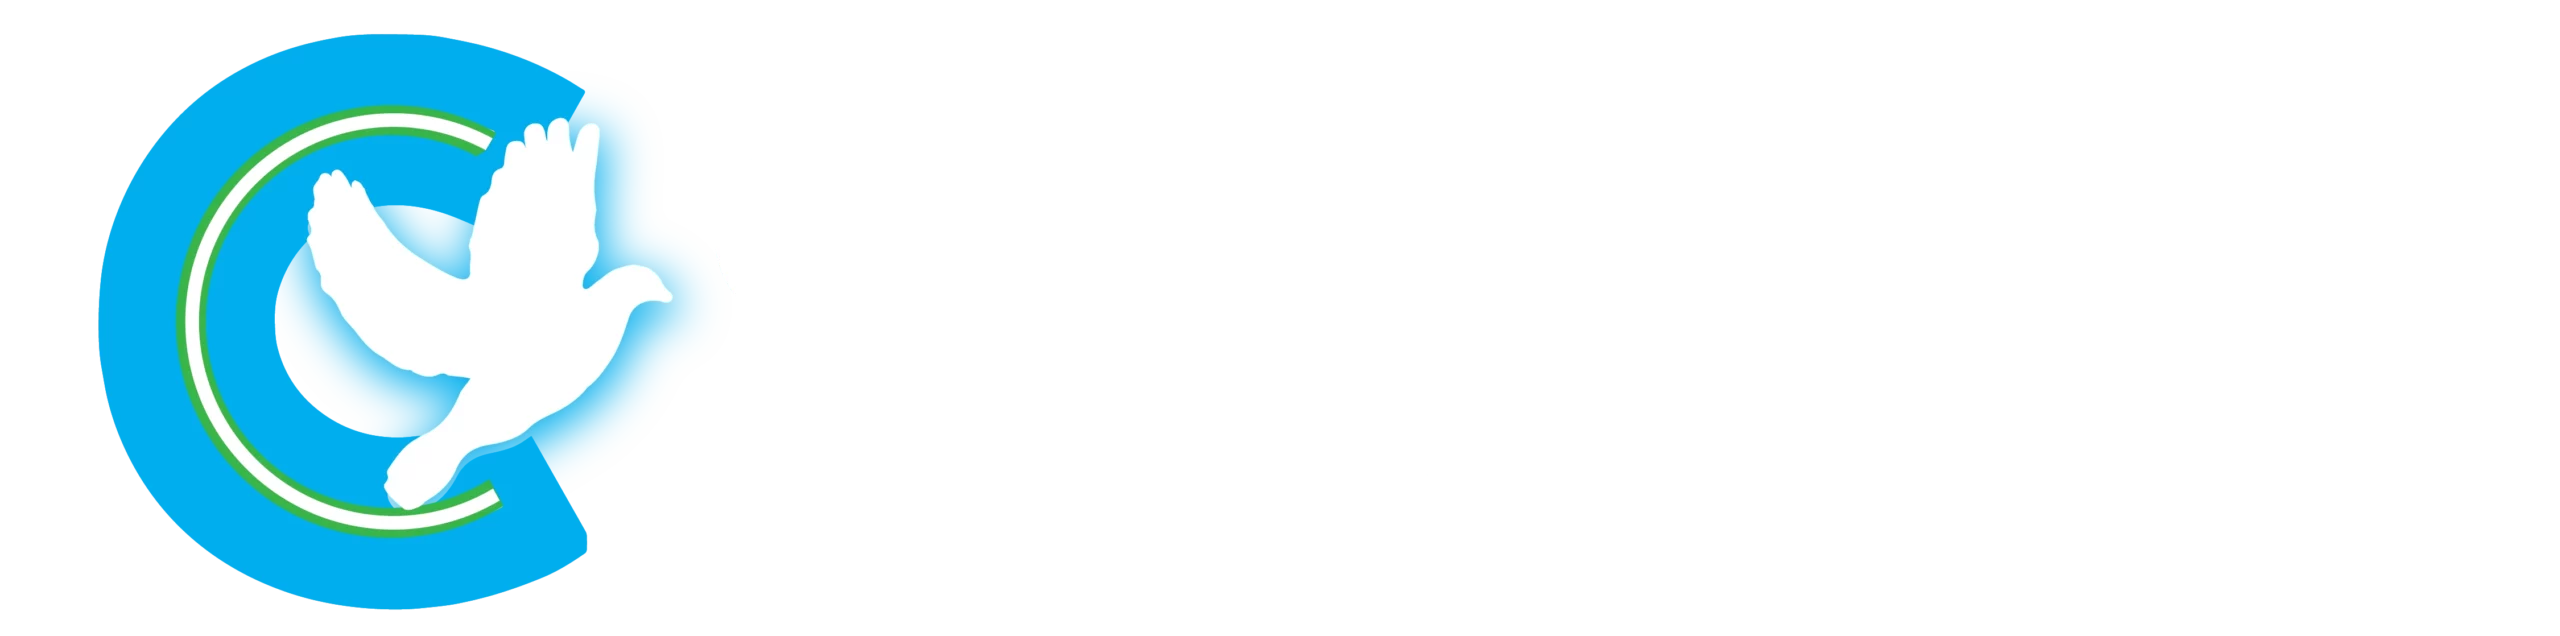 cornerstone-app-logo-with-white-text-transparent